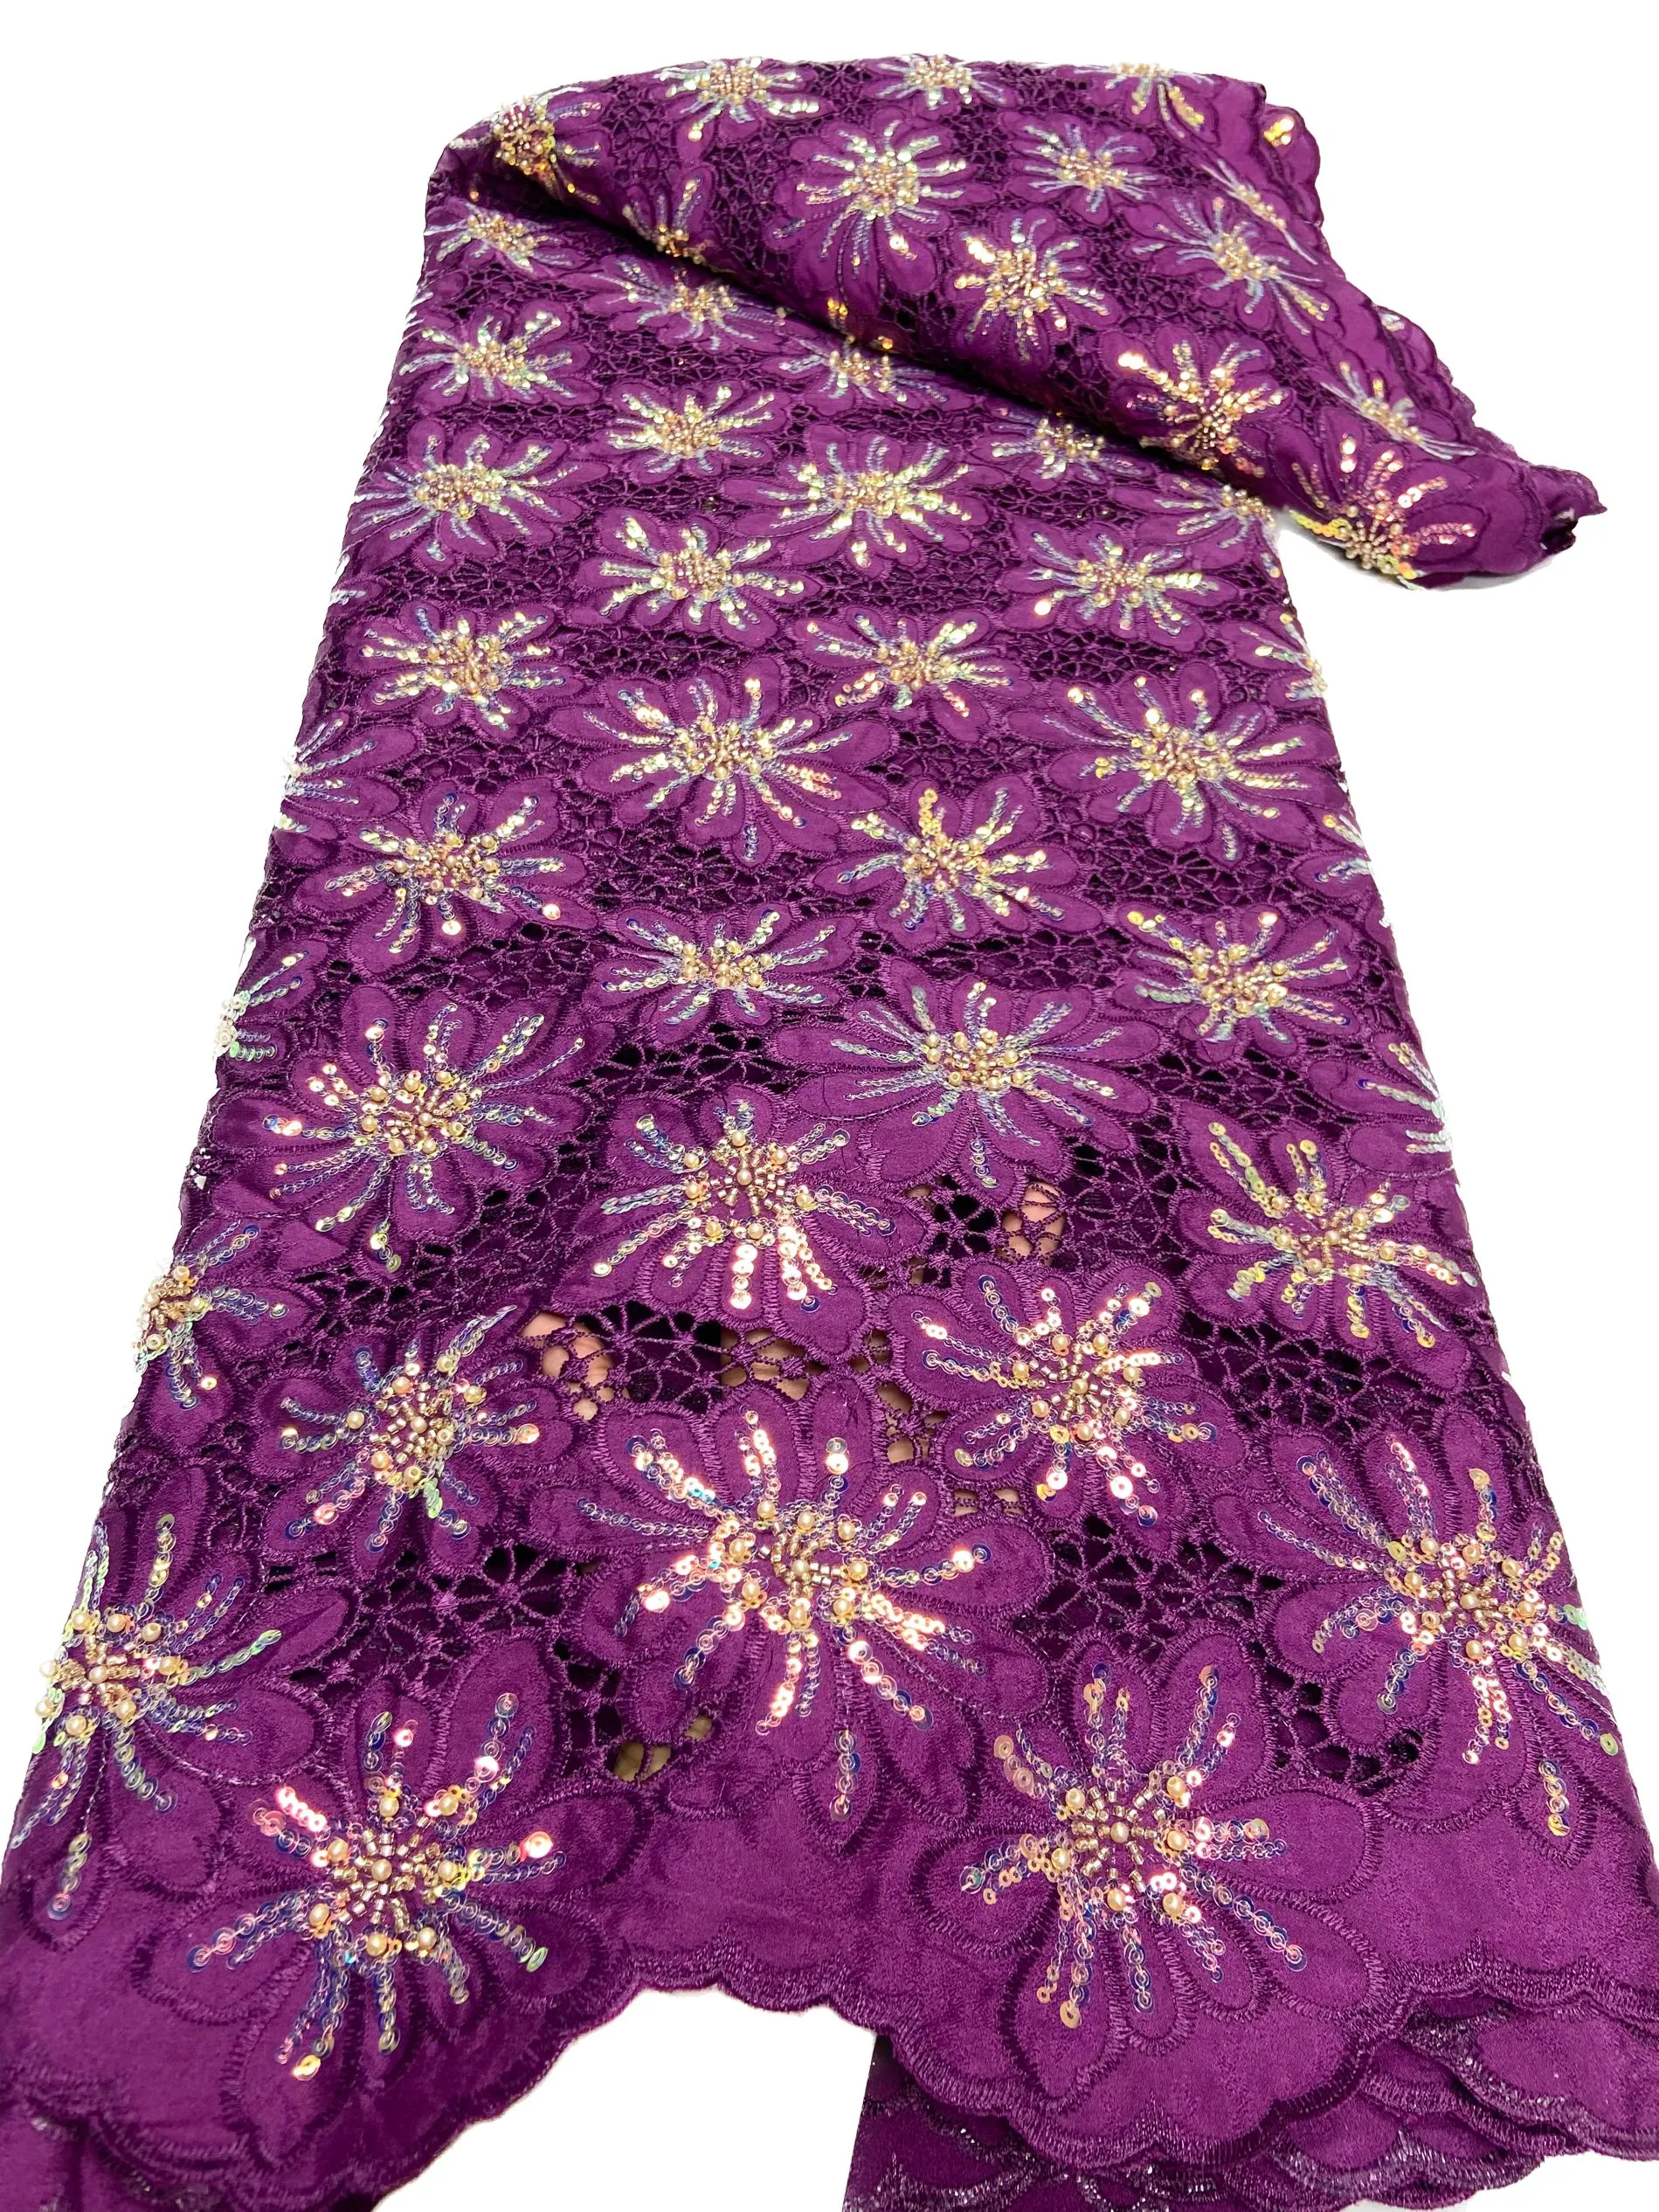 2023 Mulheres Africanas Cord Lace Tecido Costura Artesanal Vestido de Alta Qualidade 5 Metros Bordado a Laser com Lantejoulas Festa Banquete Trajes Têxteis Vestuário Nigeriano YQ-1041